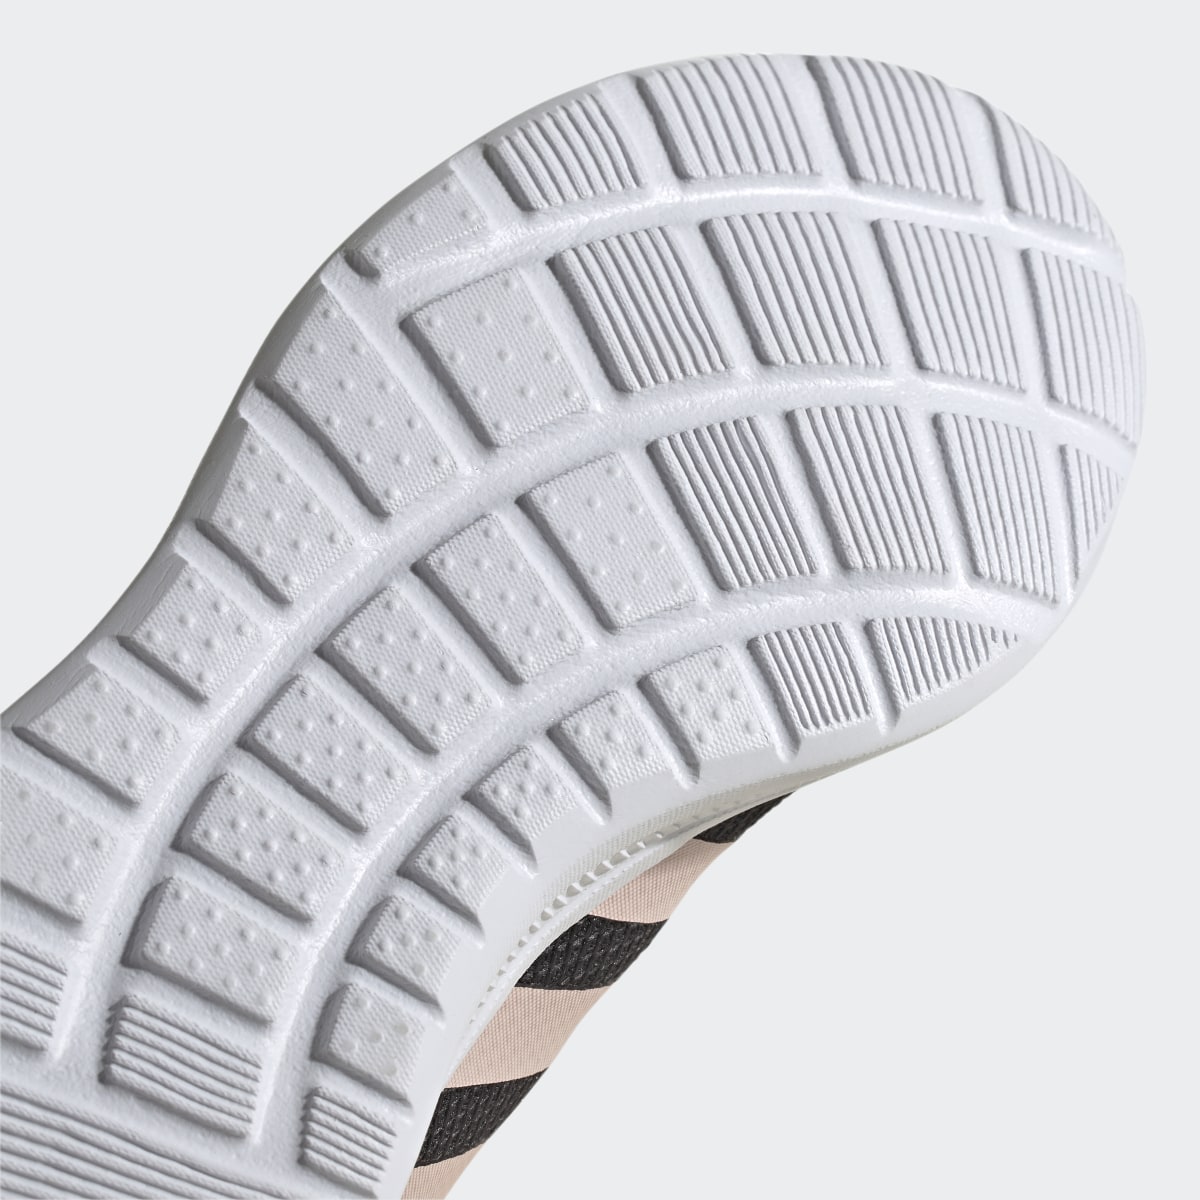 Adidas Lite Racer CLN 2.0 Shoes. 9